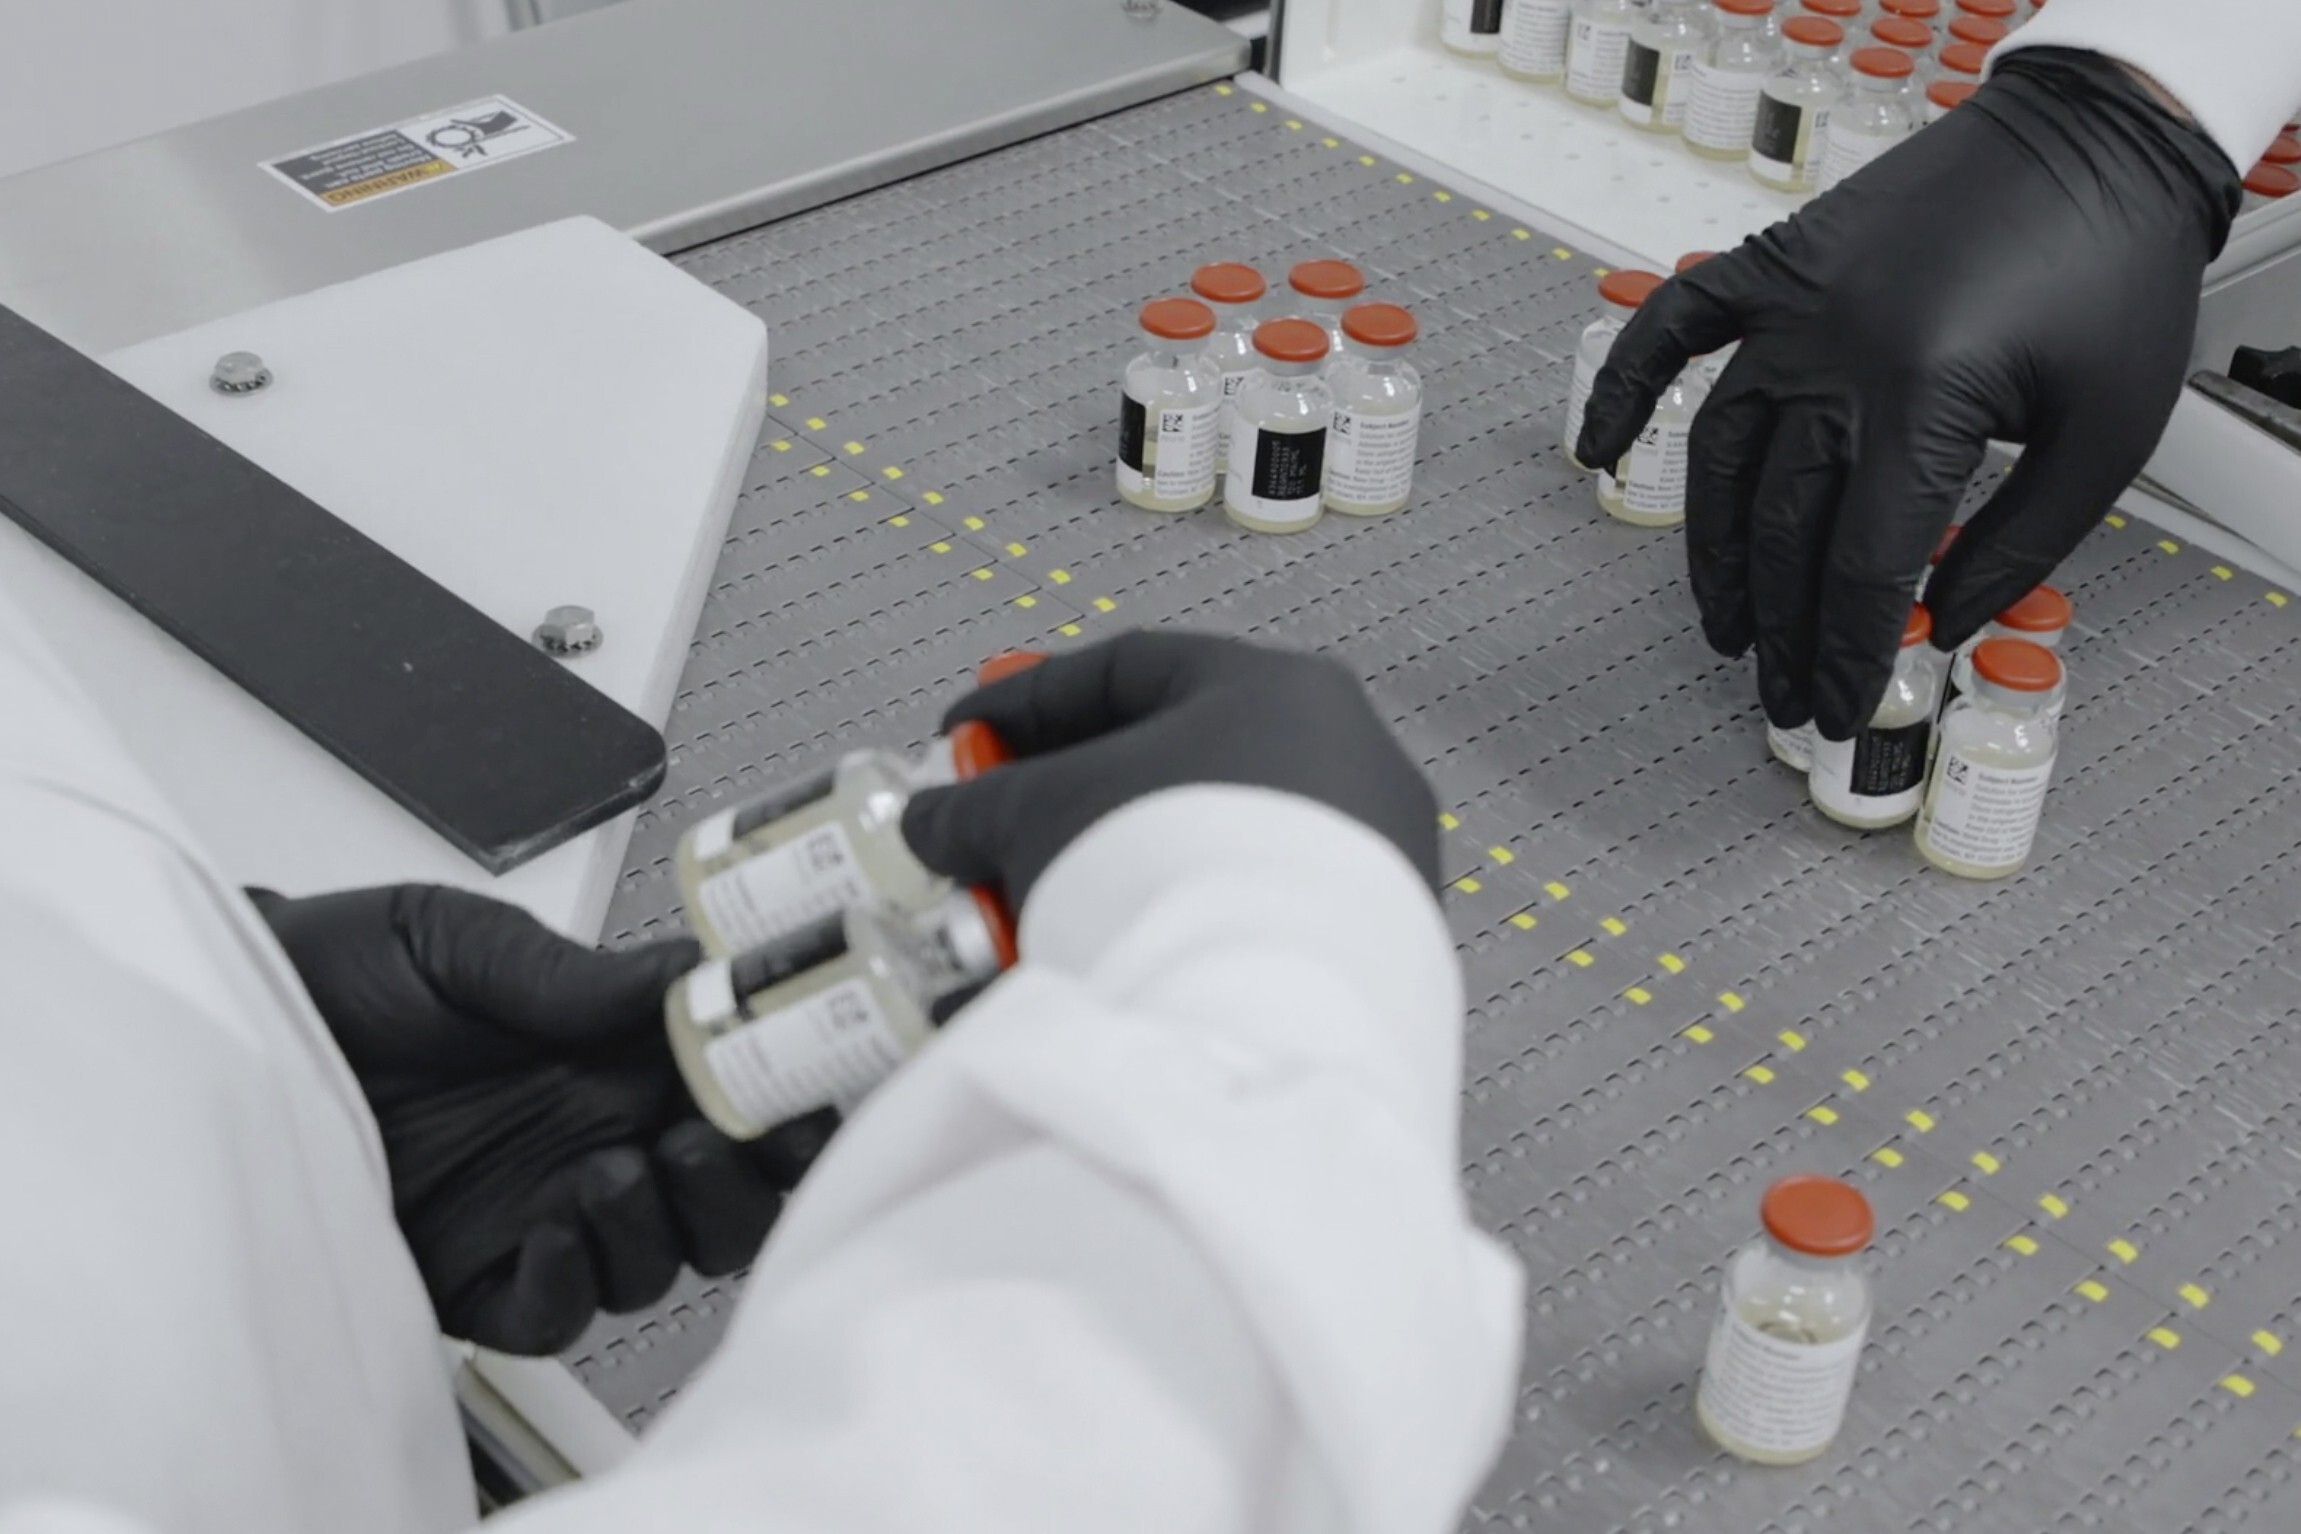 Vials are inspected at Regeneron Pharmaceuticals’ facilities in New York. Photo: Regeneron handout via AP